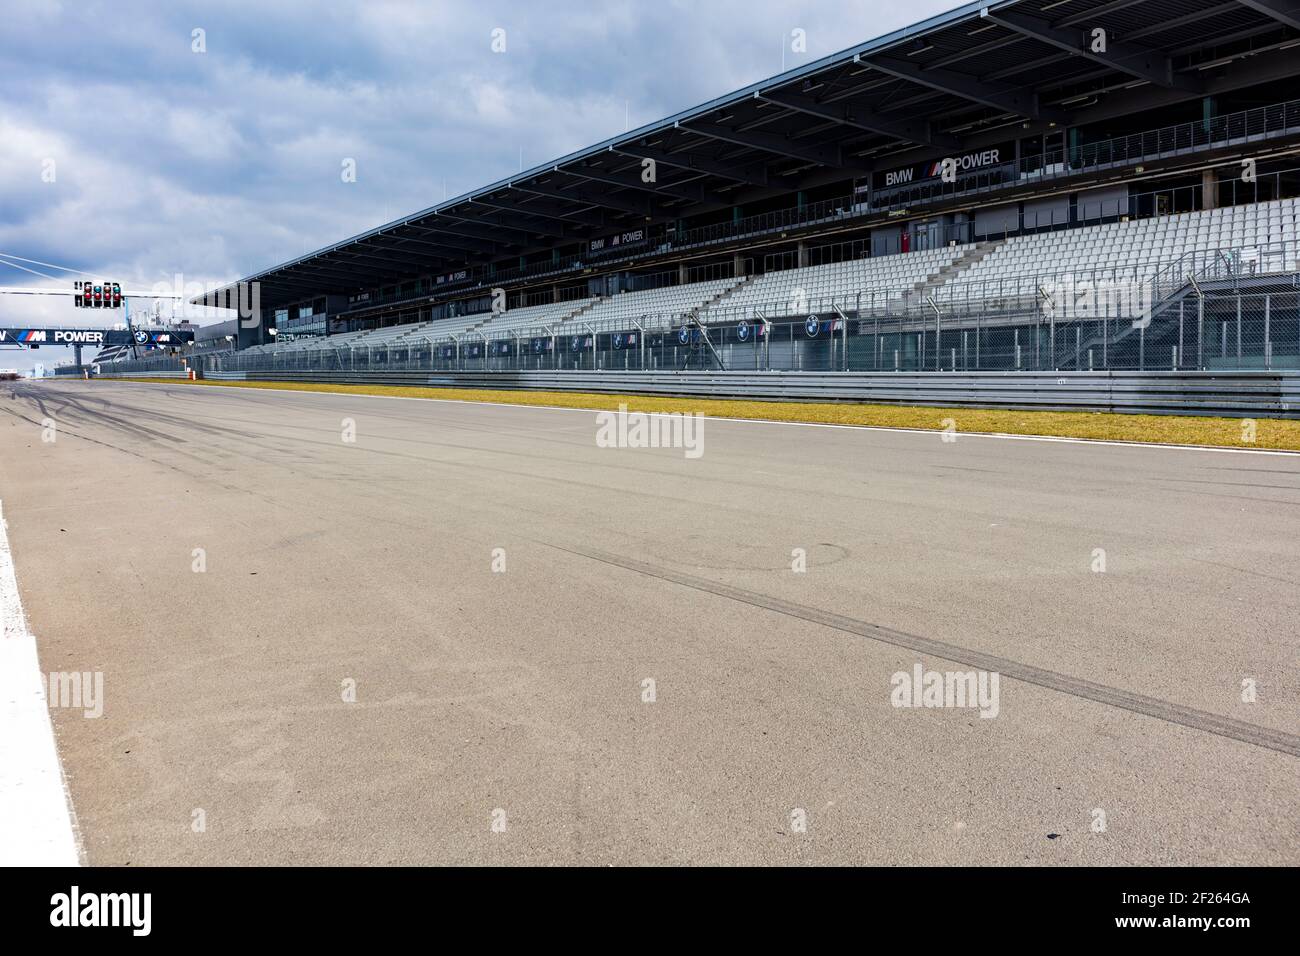 Nürburgring, empty seats, no races, no events Stock Photo